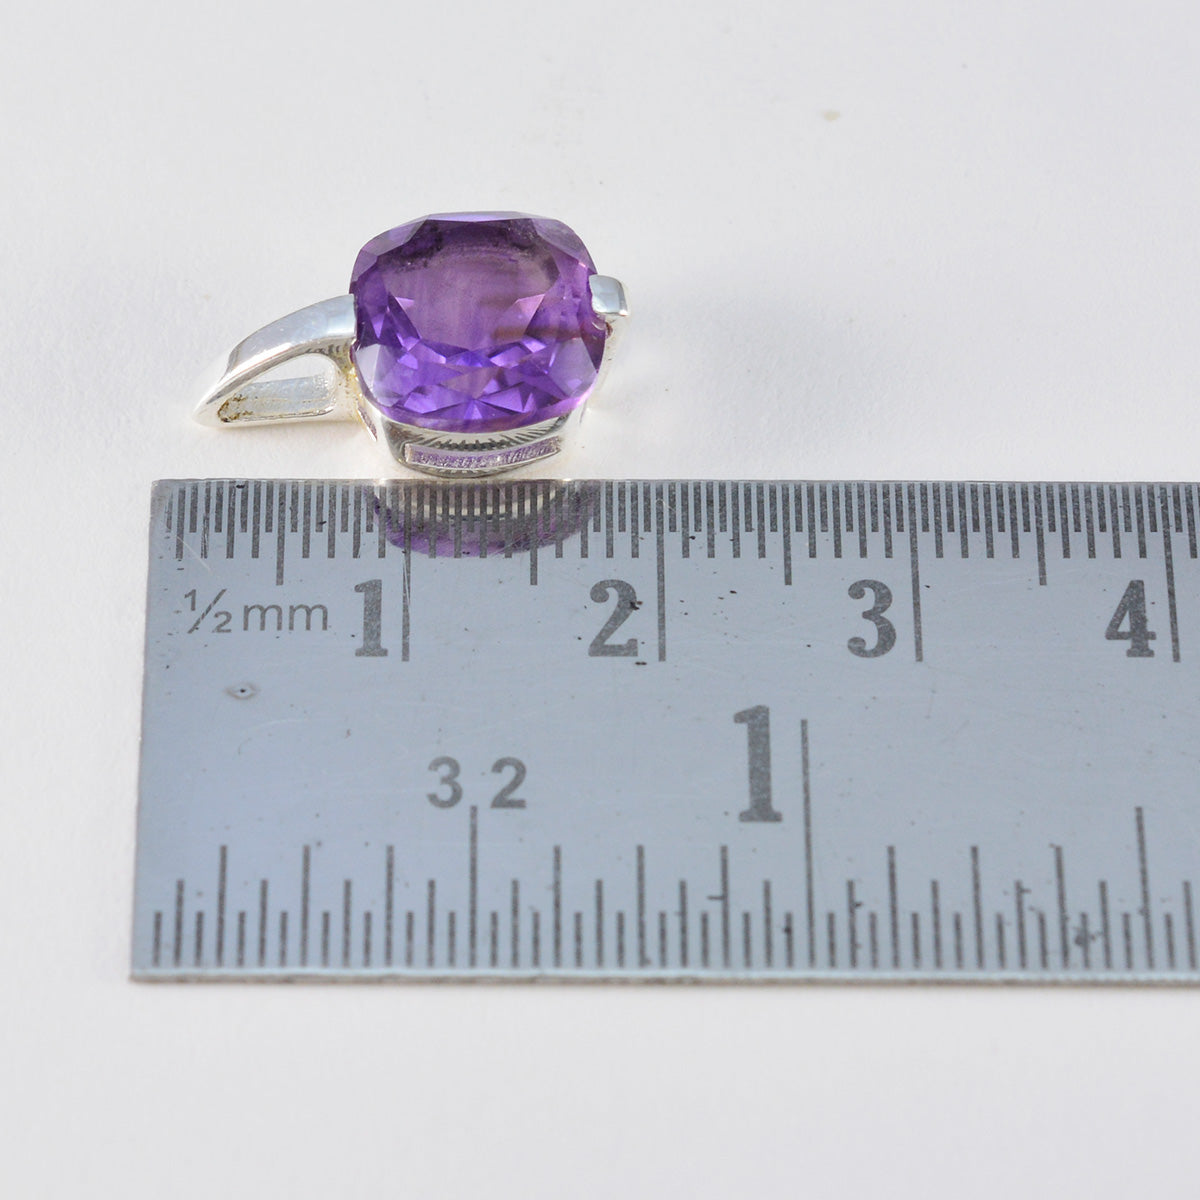 Riyo Nice Gemstone Oval Faceted Purple Amethyst 937 Sterling Silver Pendant Gift For Birthday